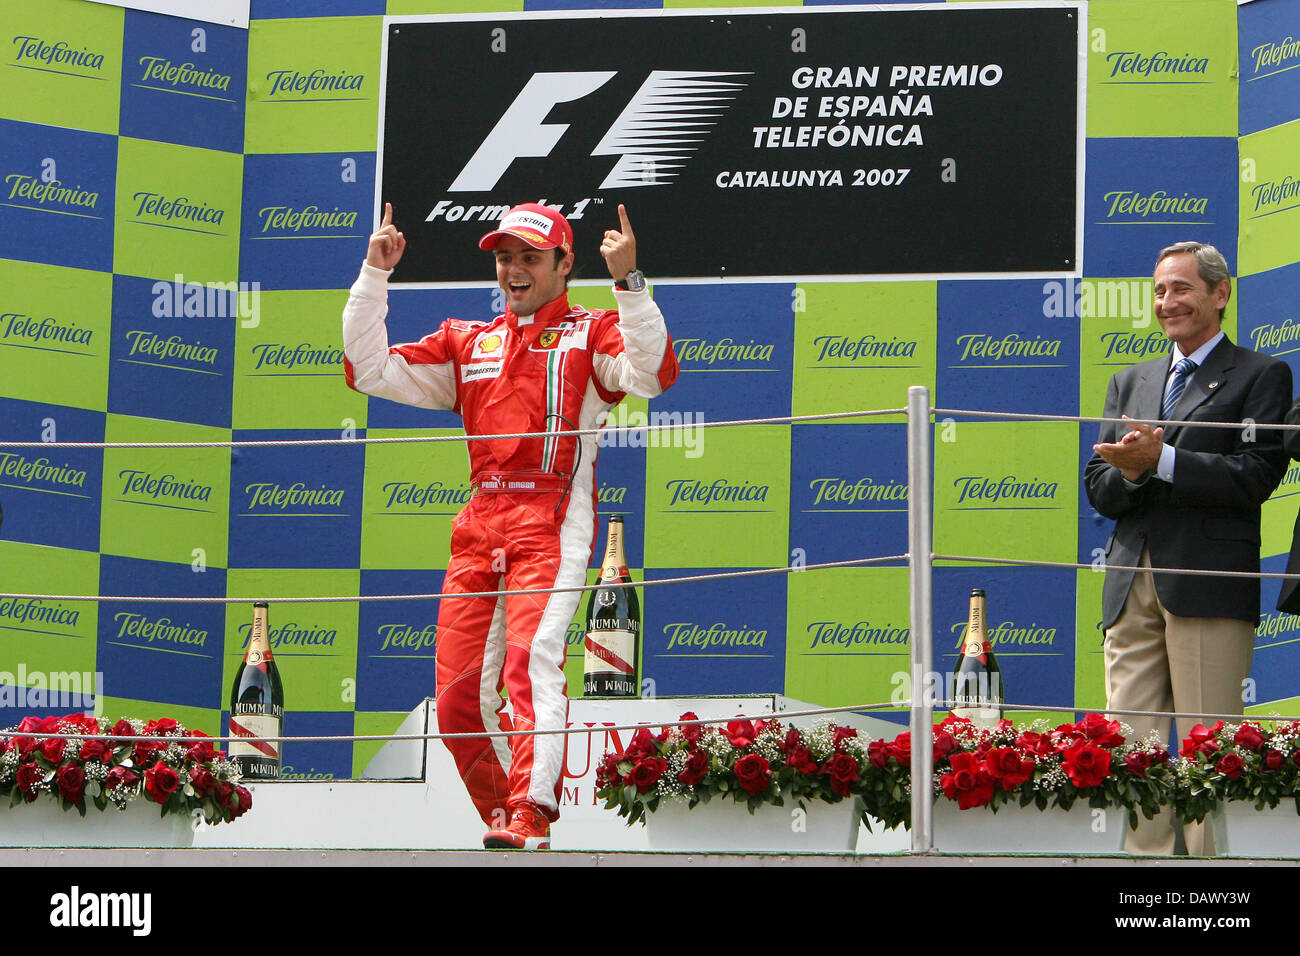 Brazilian Formula One pilot Felipe Massa of Ferrari celebrates his victory on the podium after the Spanish Grand Prix at Circuit de Catalunya race track in Montmelo near Barcelona, Spain, Sunday, 13 May 2007. Photo: JENS BUETTNER Stock Photo